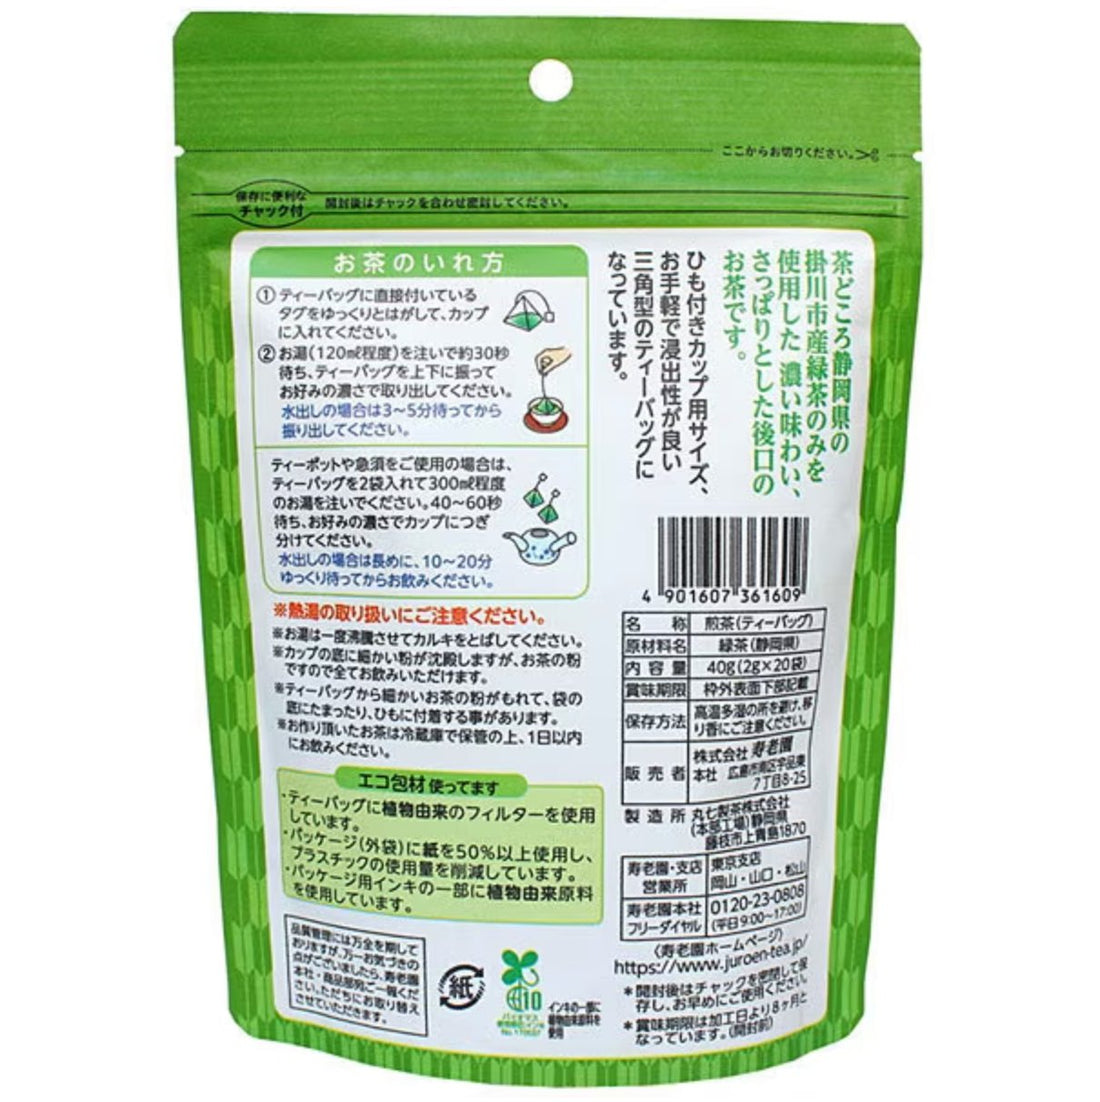 Juroen tea production area finish Kakegawa green tea tea bags 2g x 20 bags - NihonMura